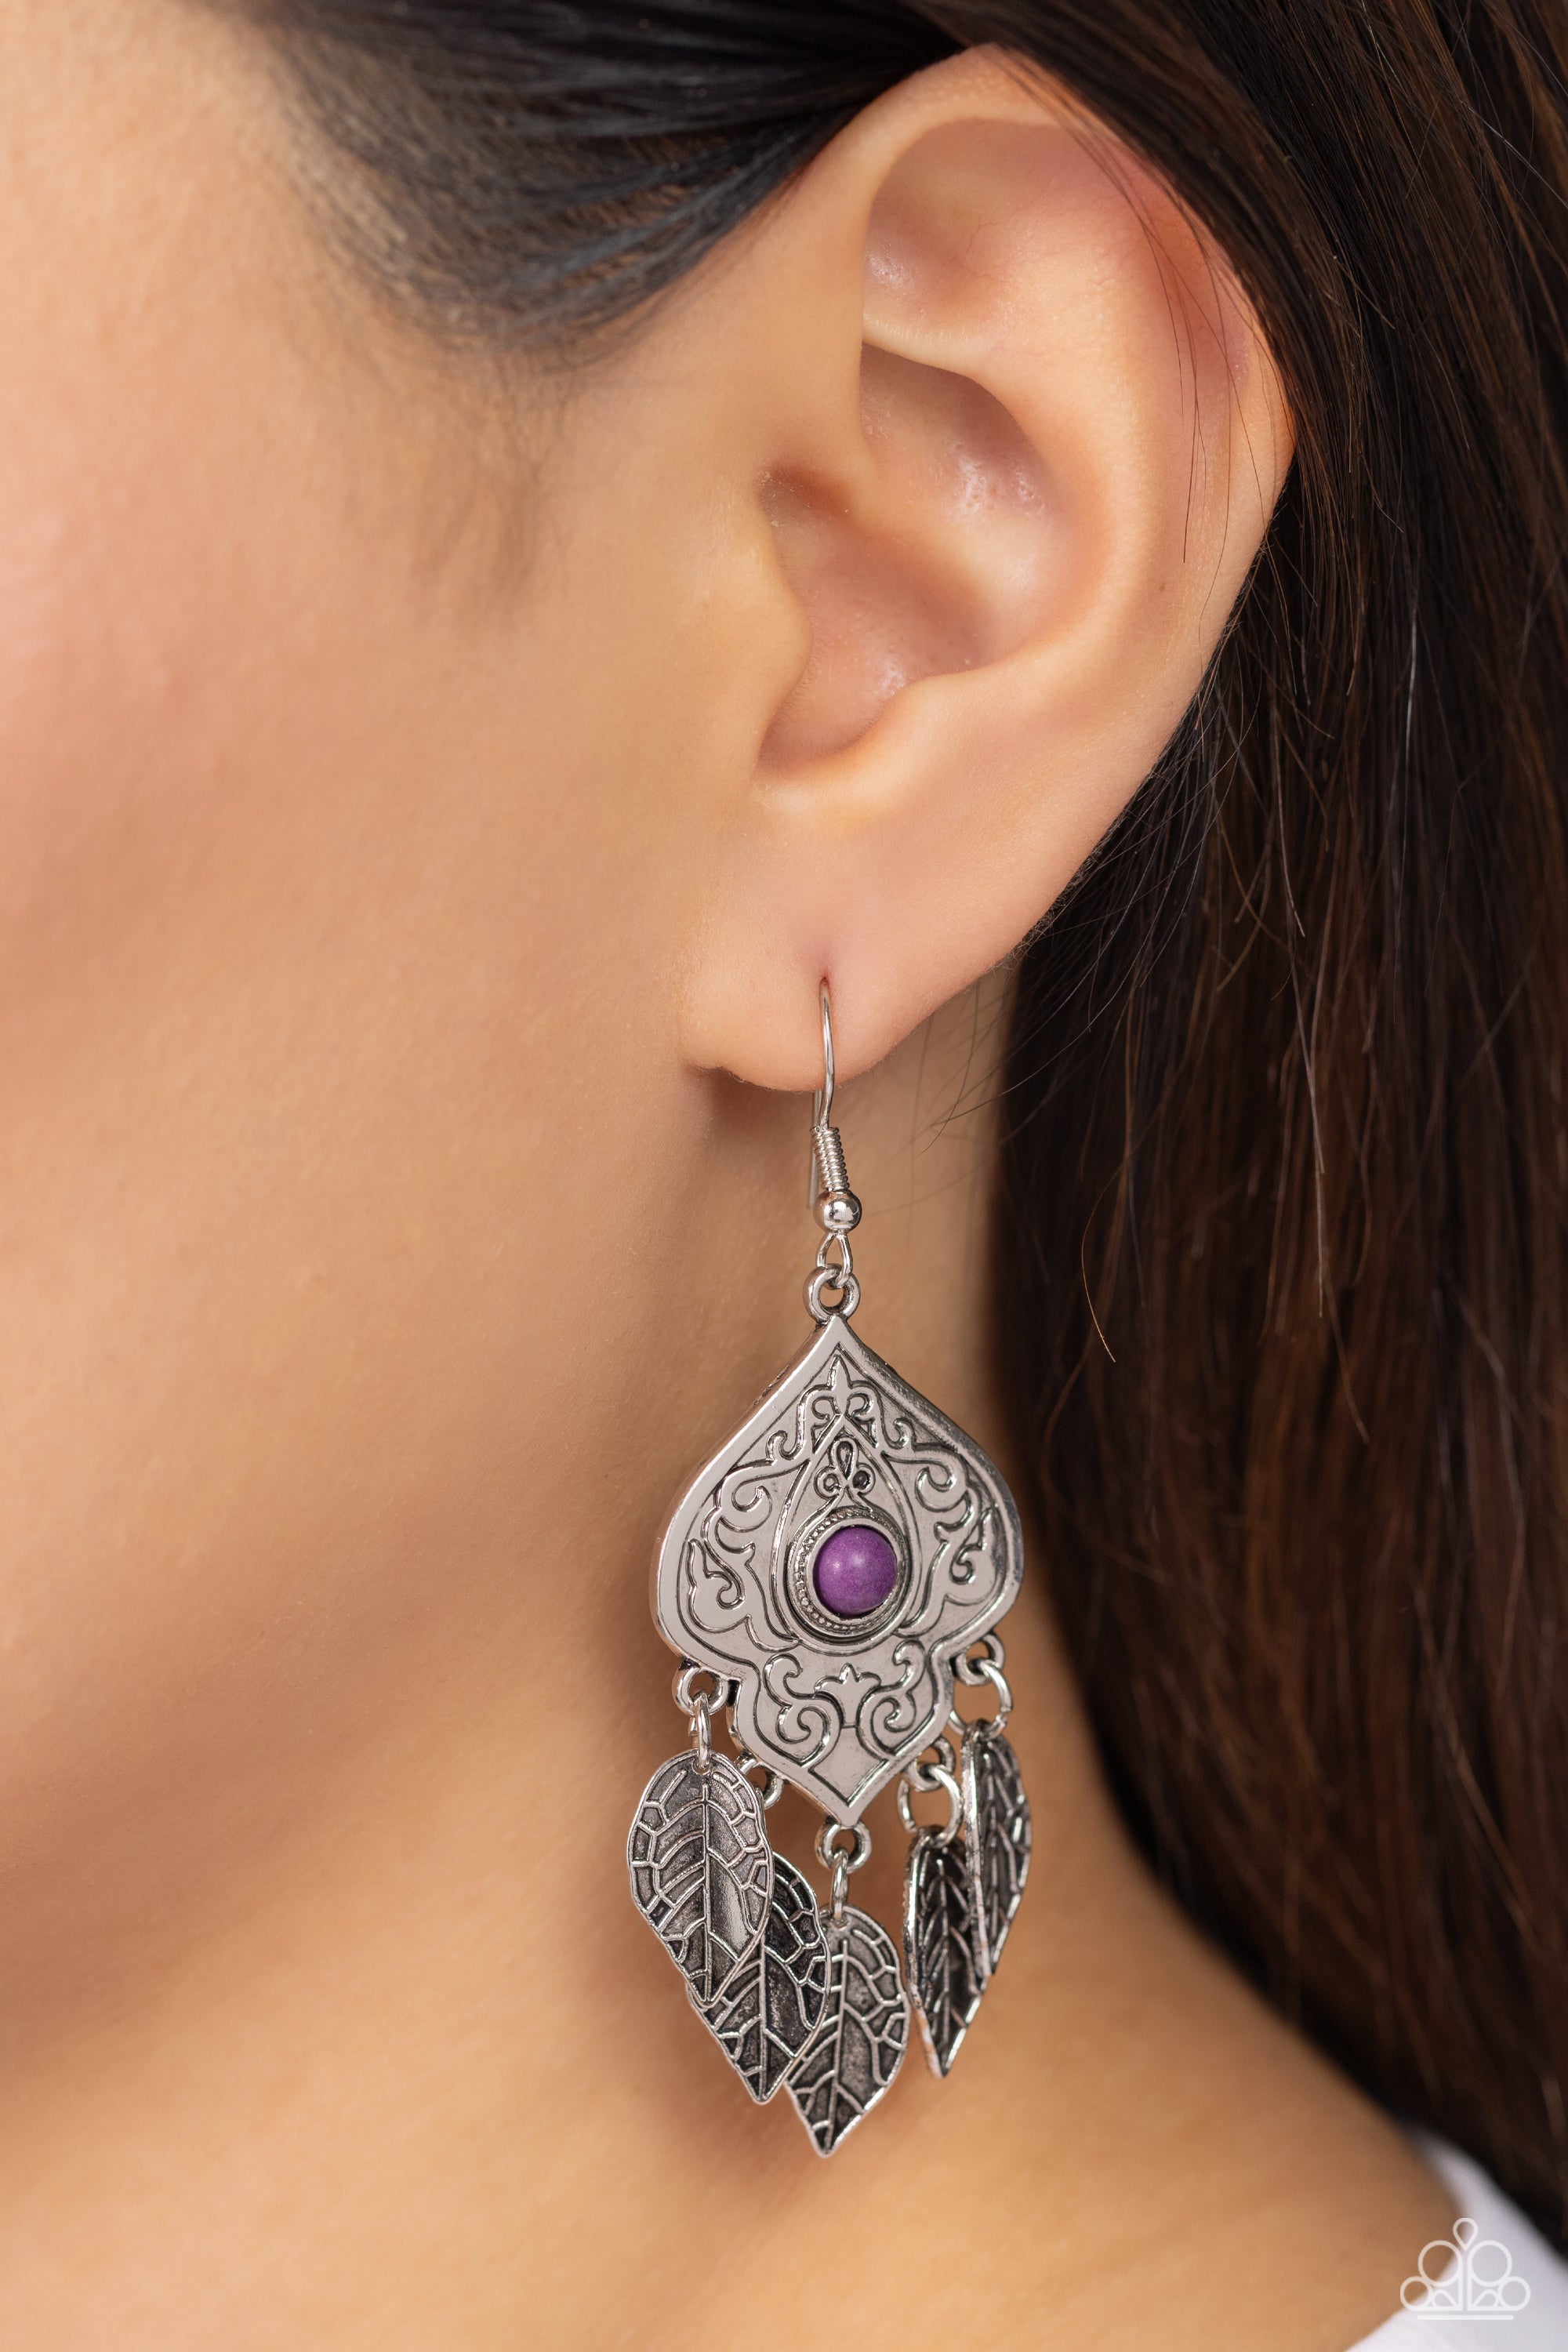 Desert Canopy Purple Earrings - Paparazzi Accessories- lightbox - CarasShop.com - $5 Jewelry by Cara Jewels